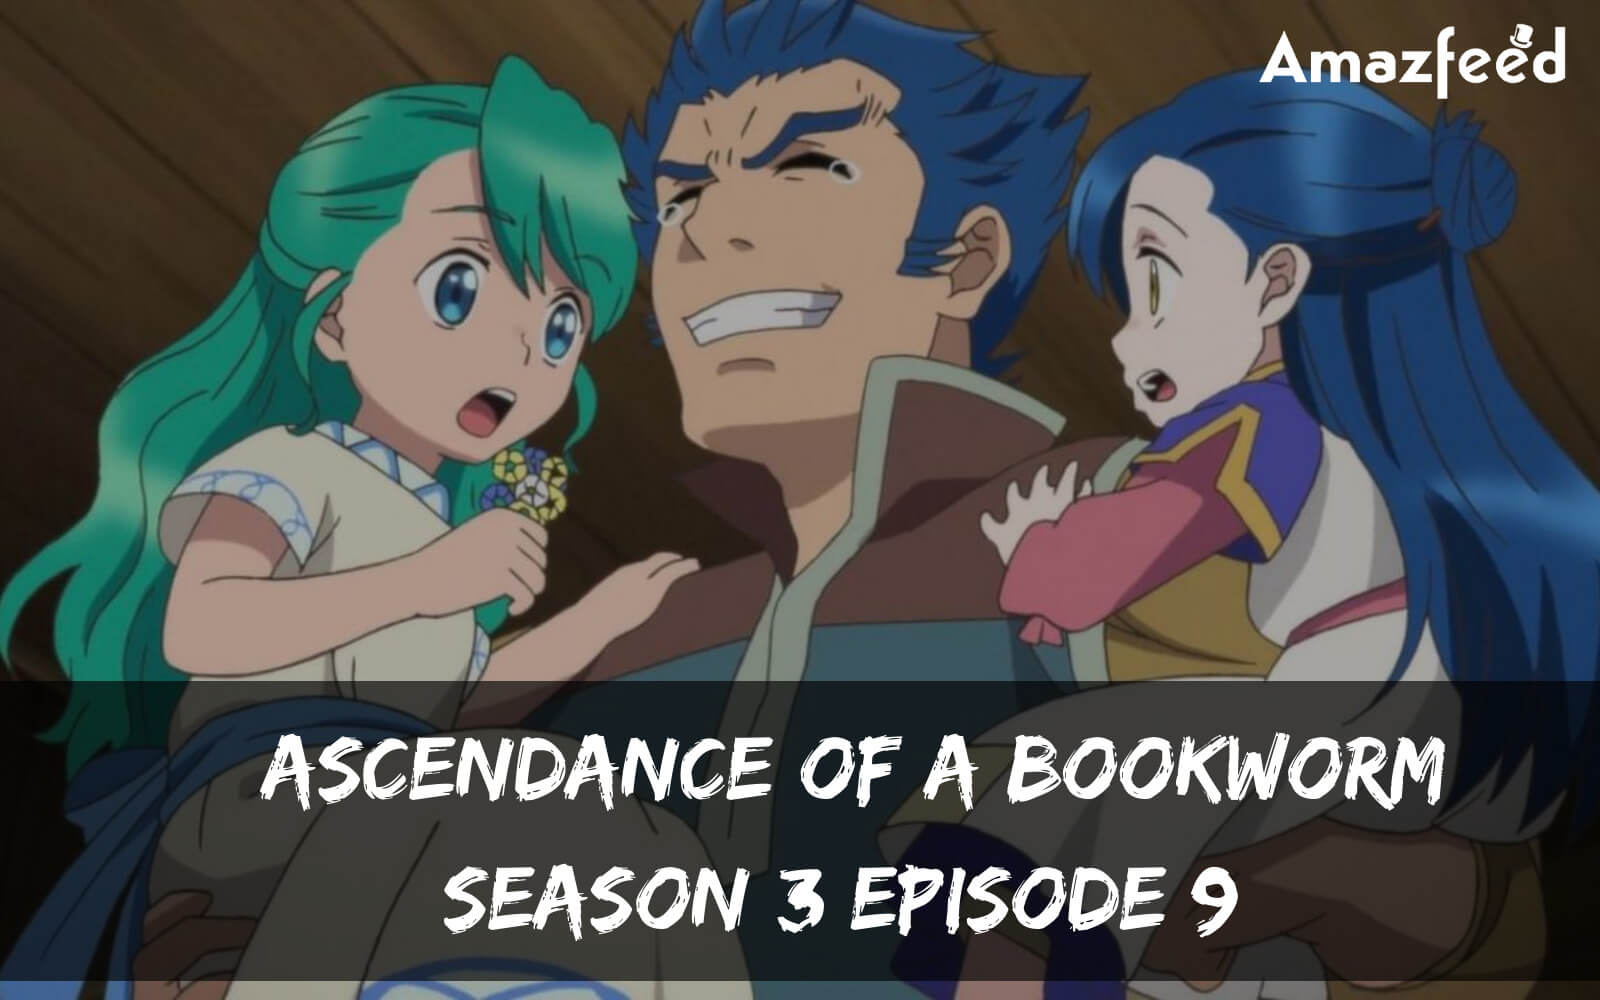 The ascendance of a Bookworm Season 3 Episode 9 release date